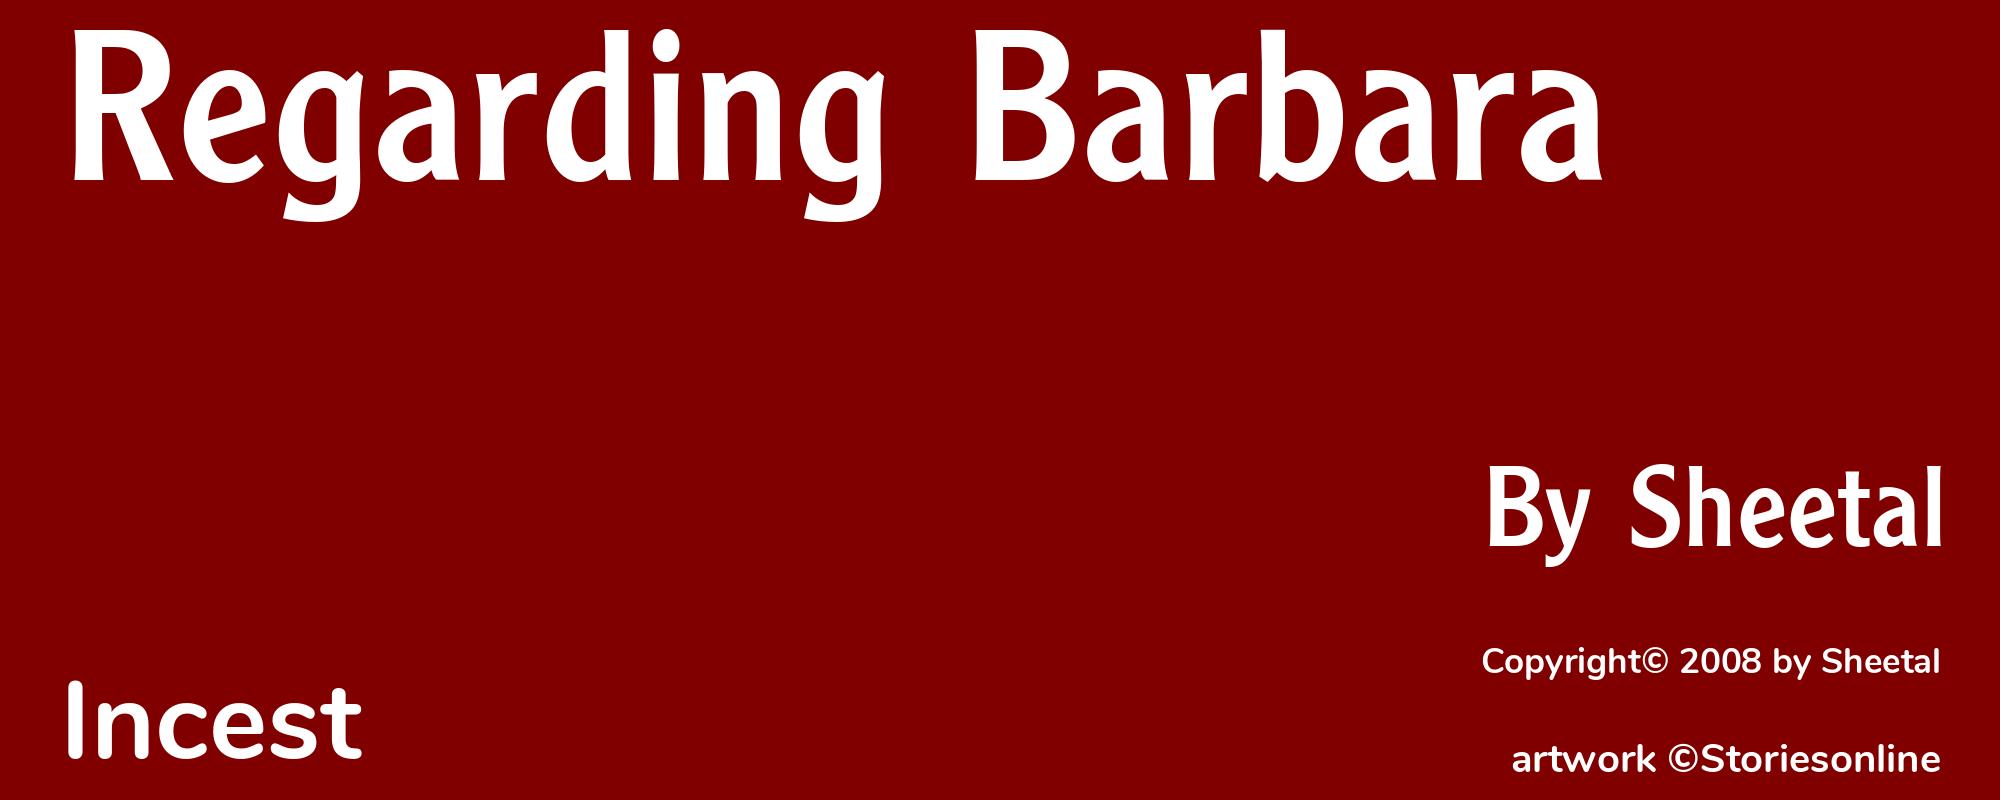 Regarding Barbara - Cover